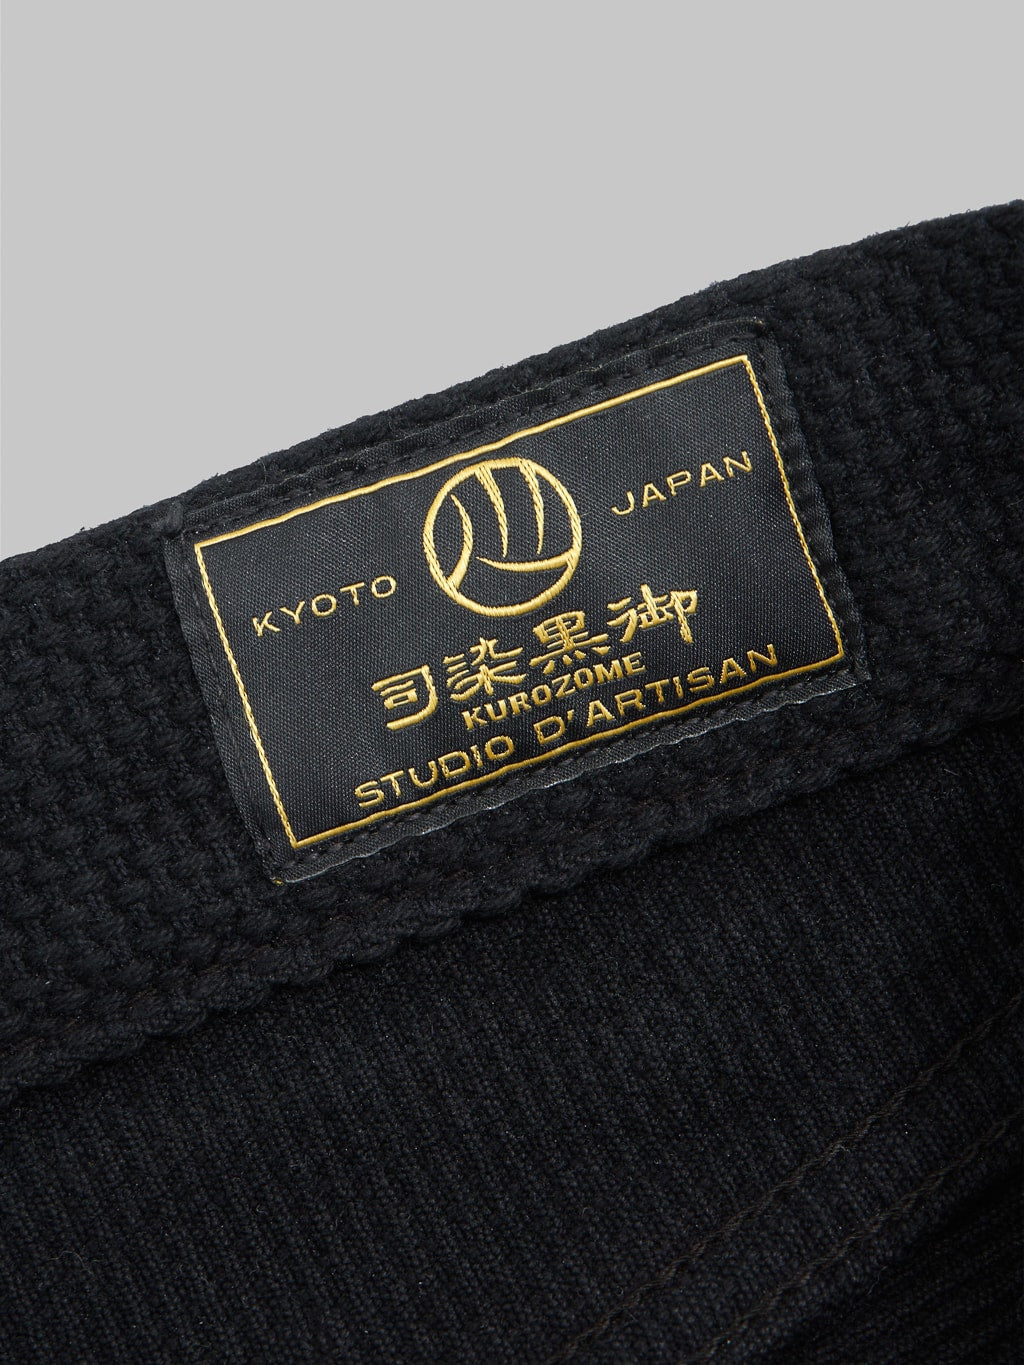 Studio DArtisan SD1877 Kurozome Black 14oz Sashiko Slim Straight Jeans interior tag